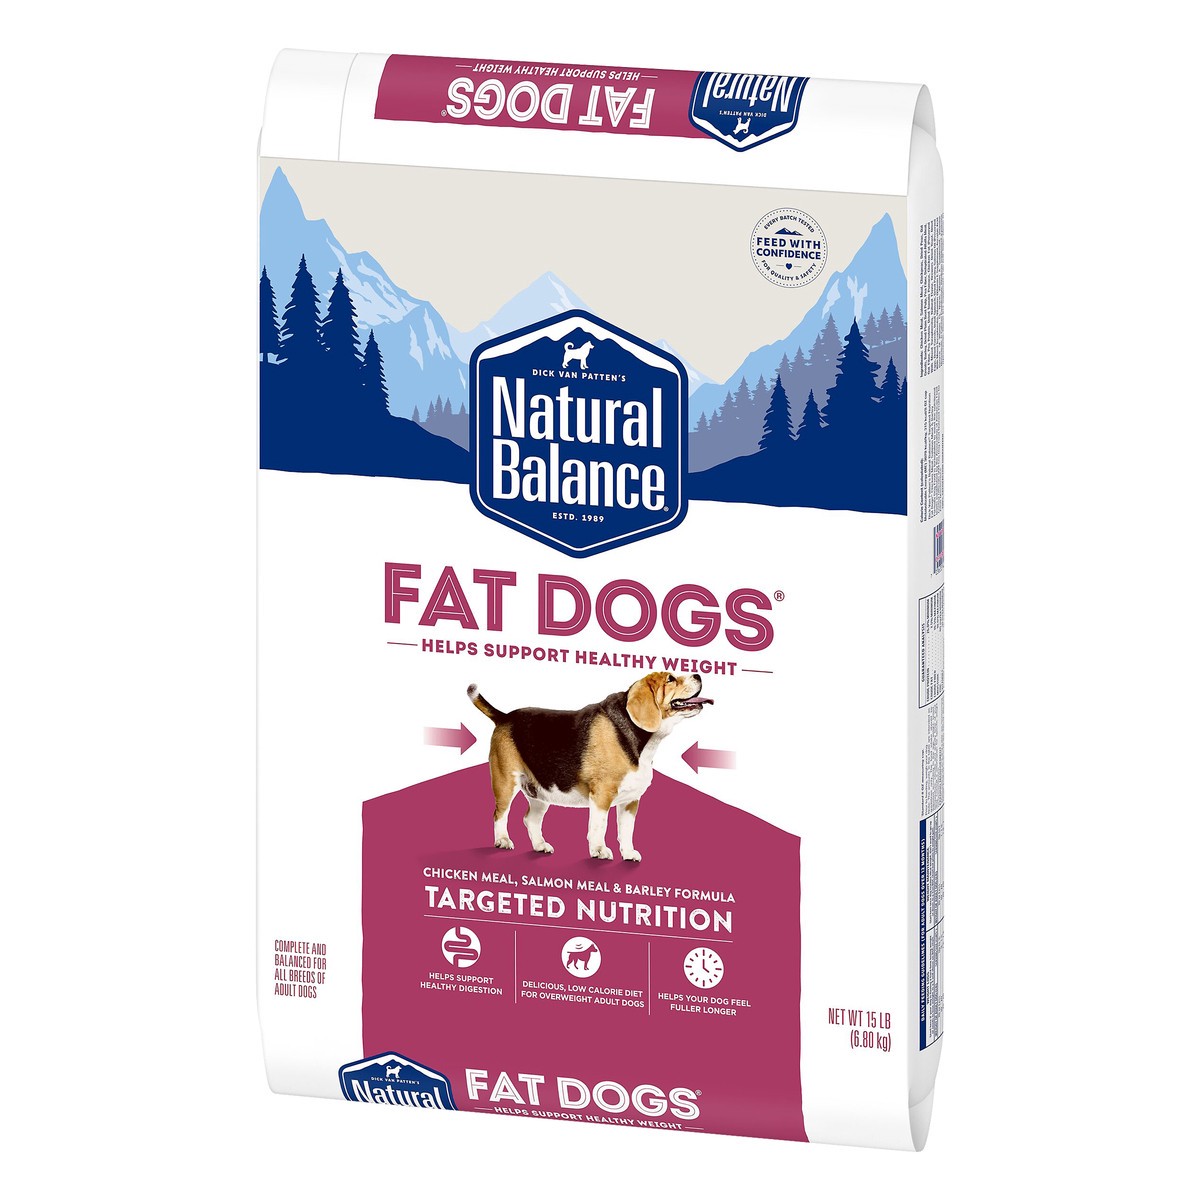 slide 6 of 9, Natural Balance Fat Dogs Chicken Meal, Salmon Meal & Barley Formula Dog Food 15 lb, 15 lb